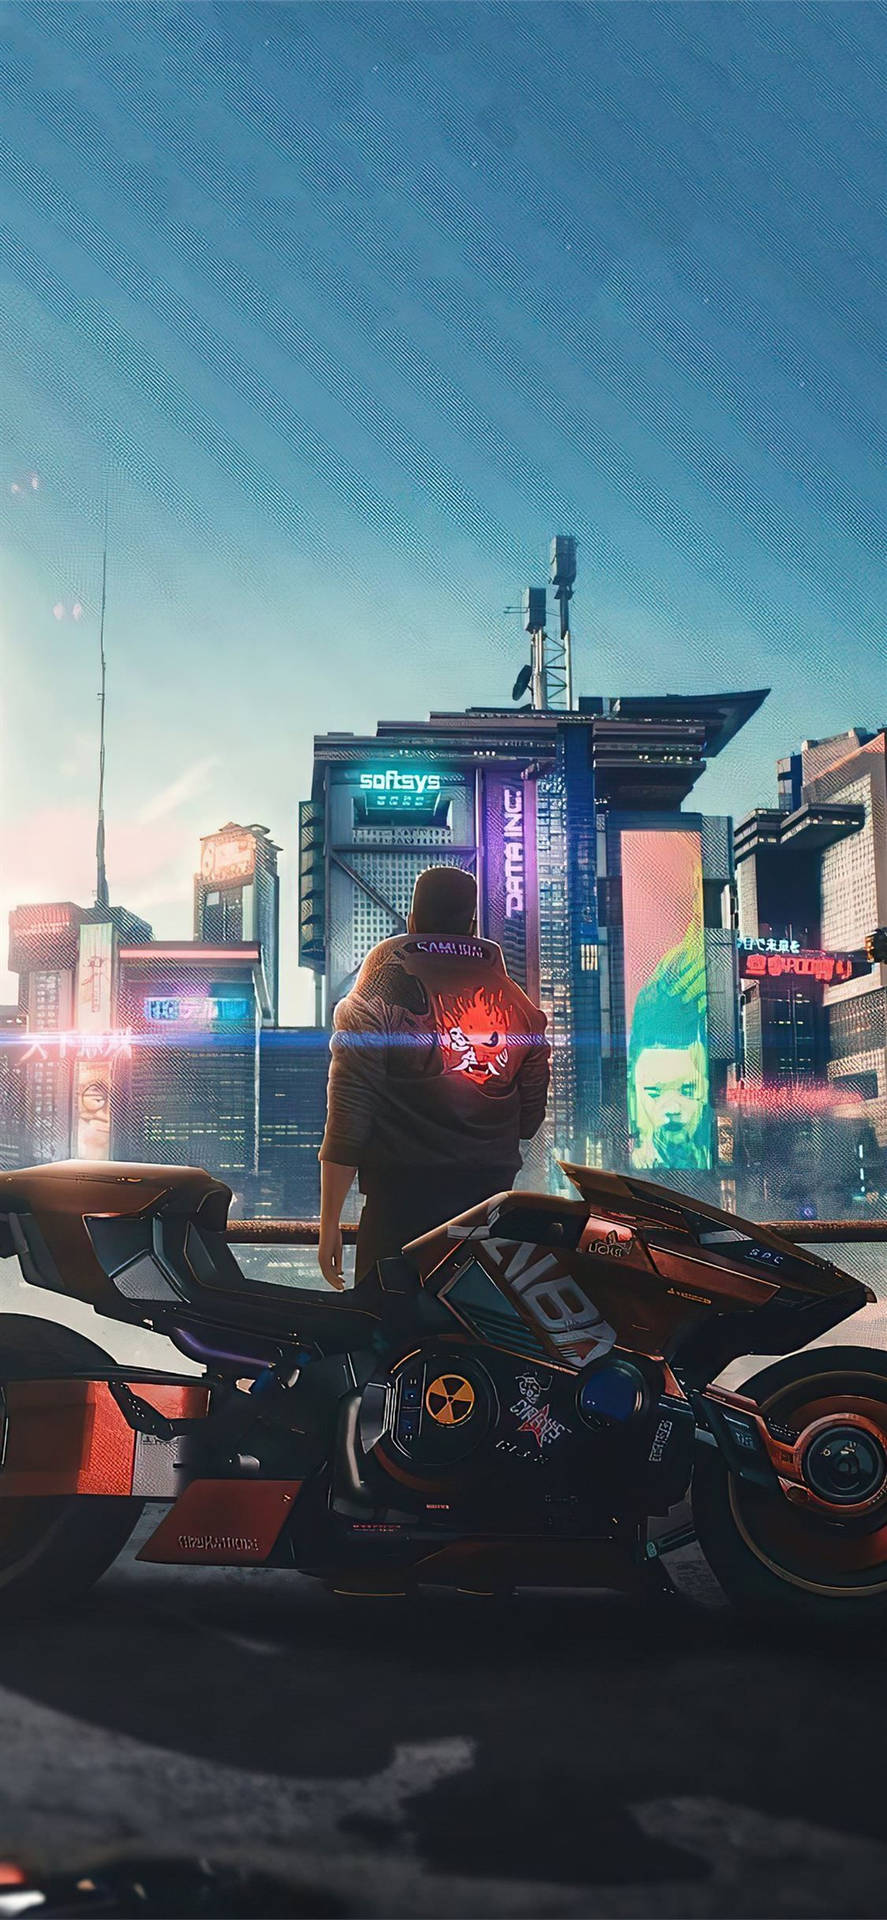 Ct-3x Motorcycle Cyberpunk 2077 Iphone Background